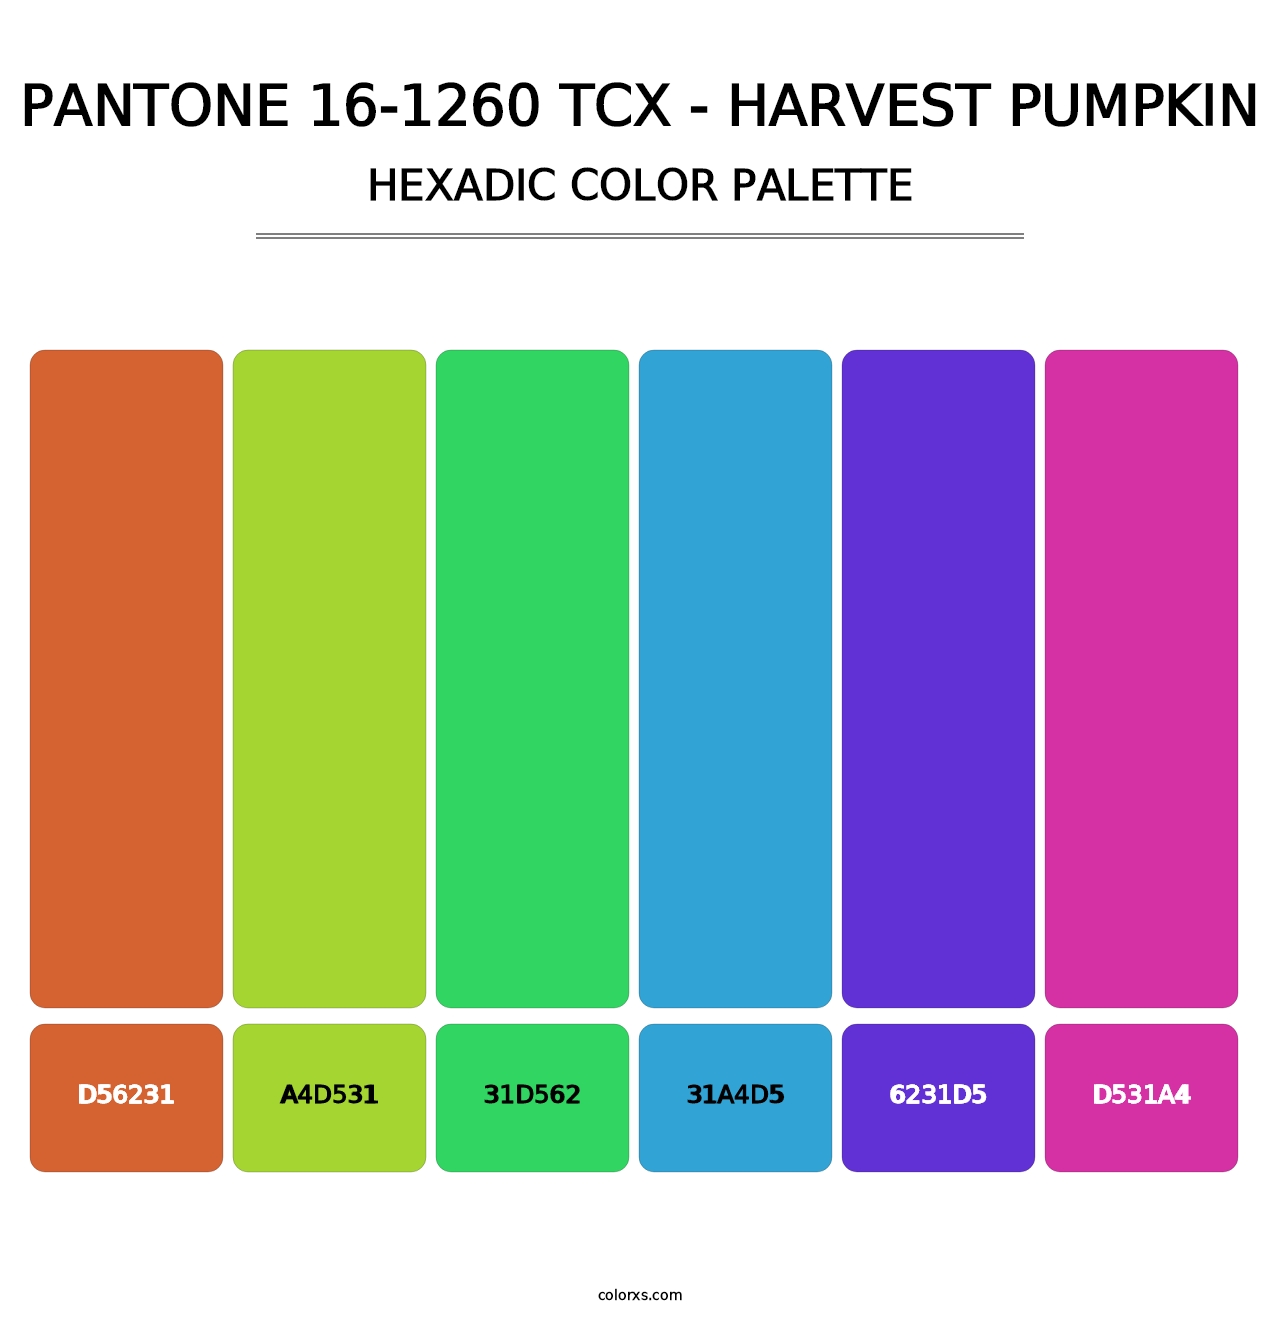 PANTONE 16-1260 TCX - Harvest Pumpkin - Hexadic Color Palette